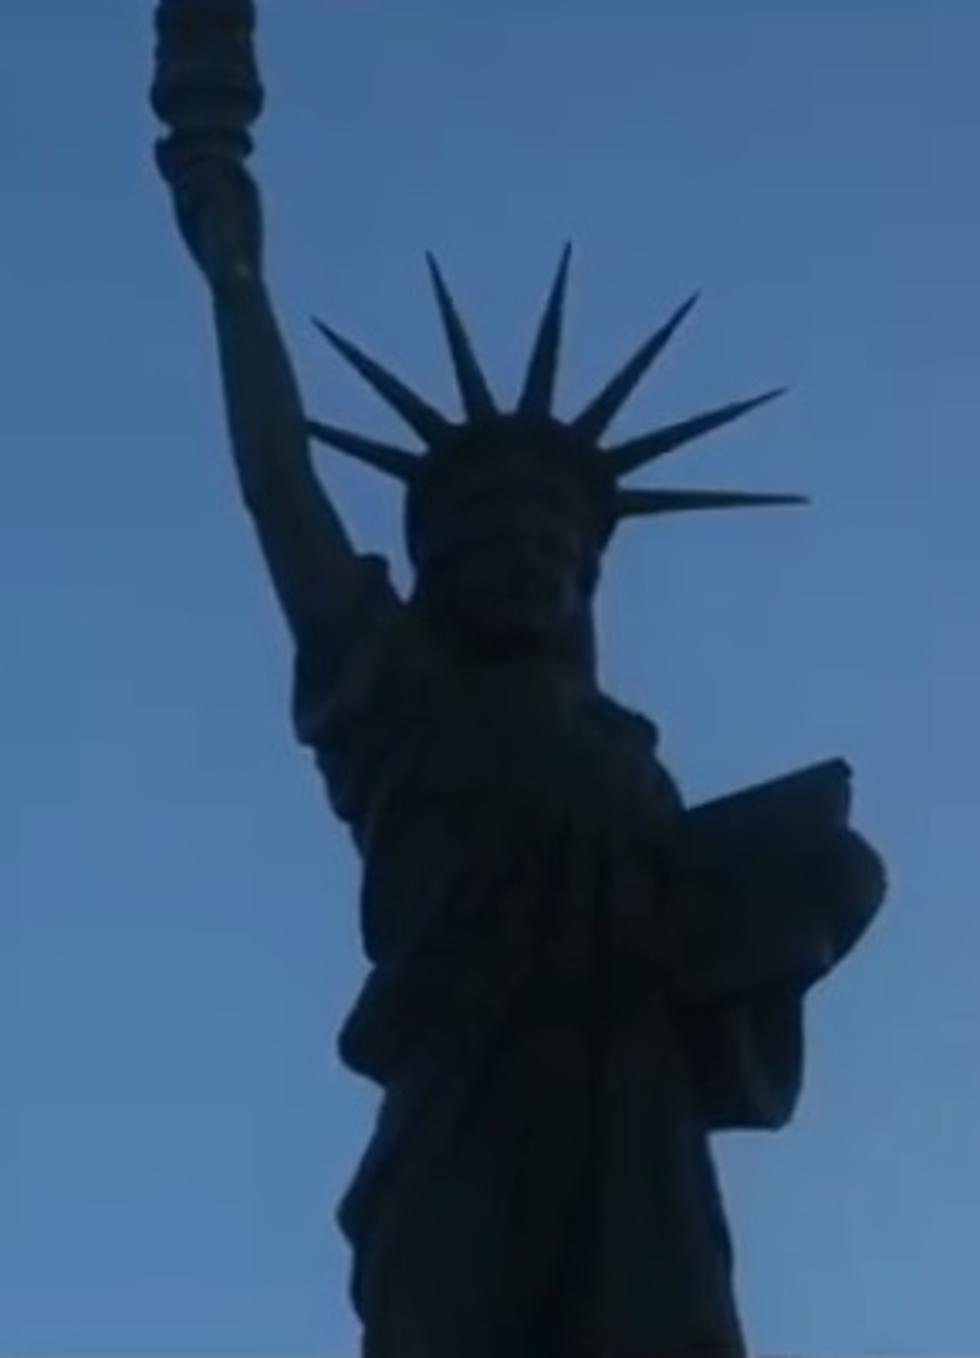 Michigan’s “Statue of Liberty” Locations